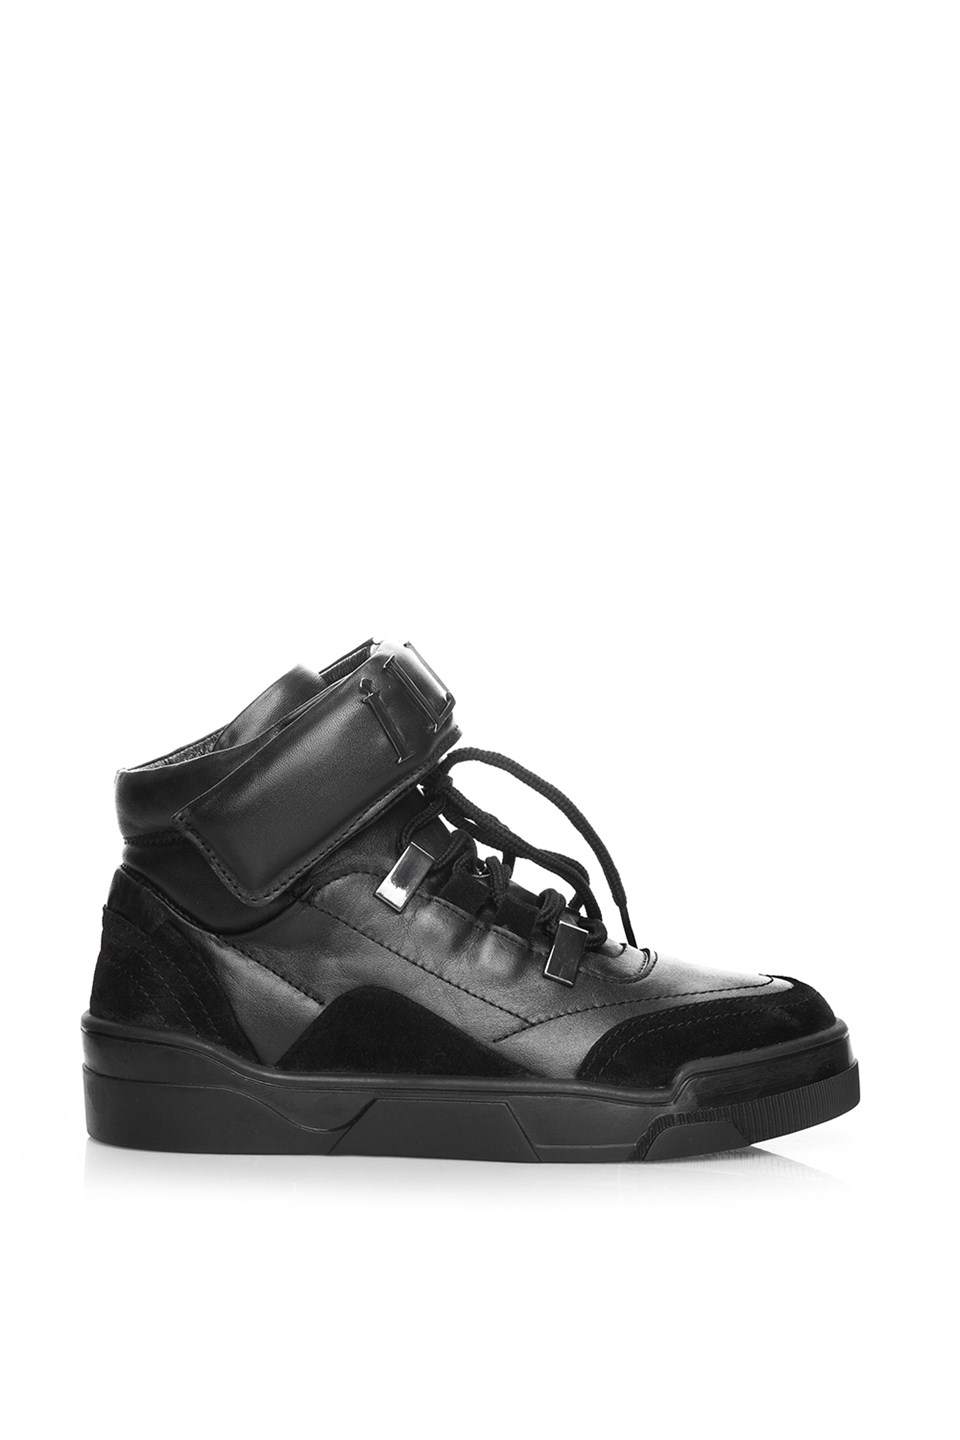 Ferra Women's Boot Black Leather - Black Split - İLVİ